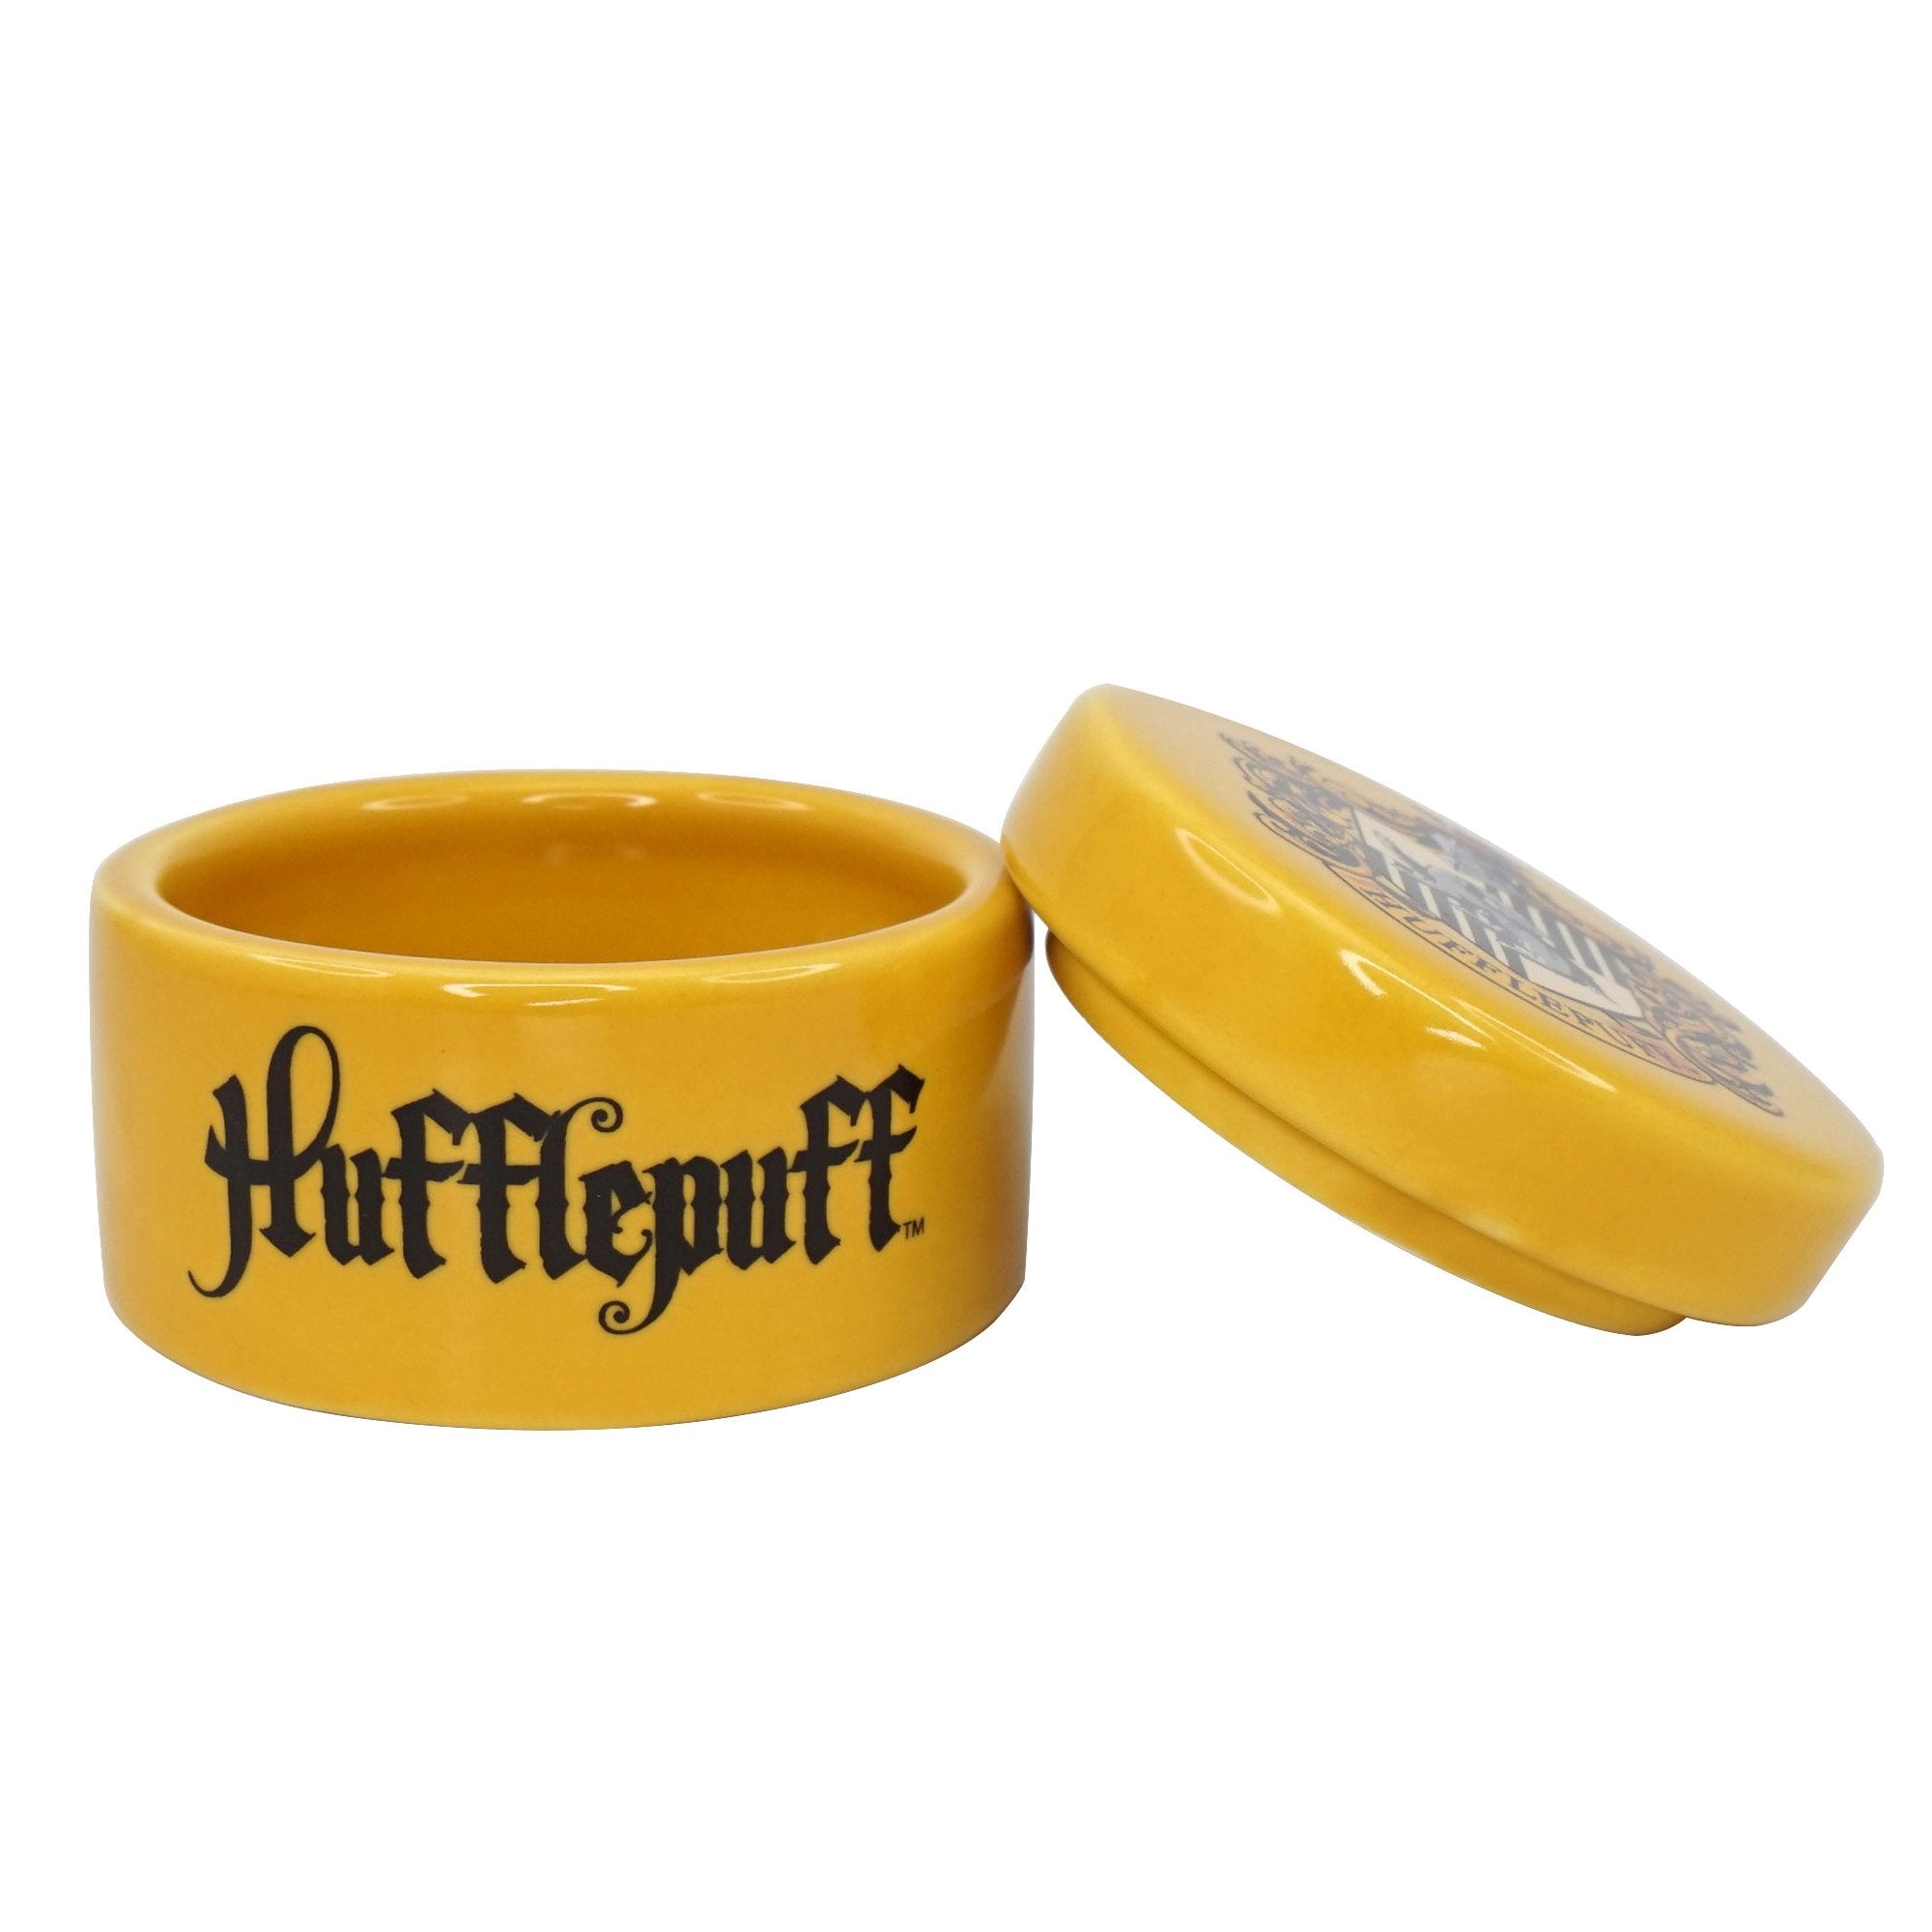 Box Round Ceramic (6cm) - Harry Potter (Hufflepuff)